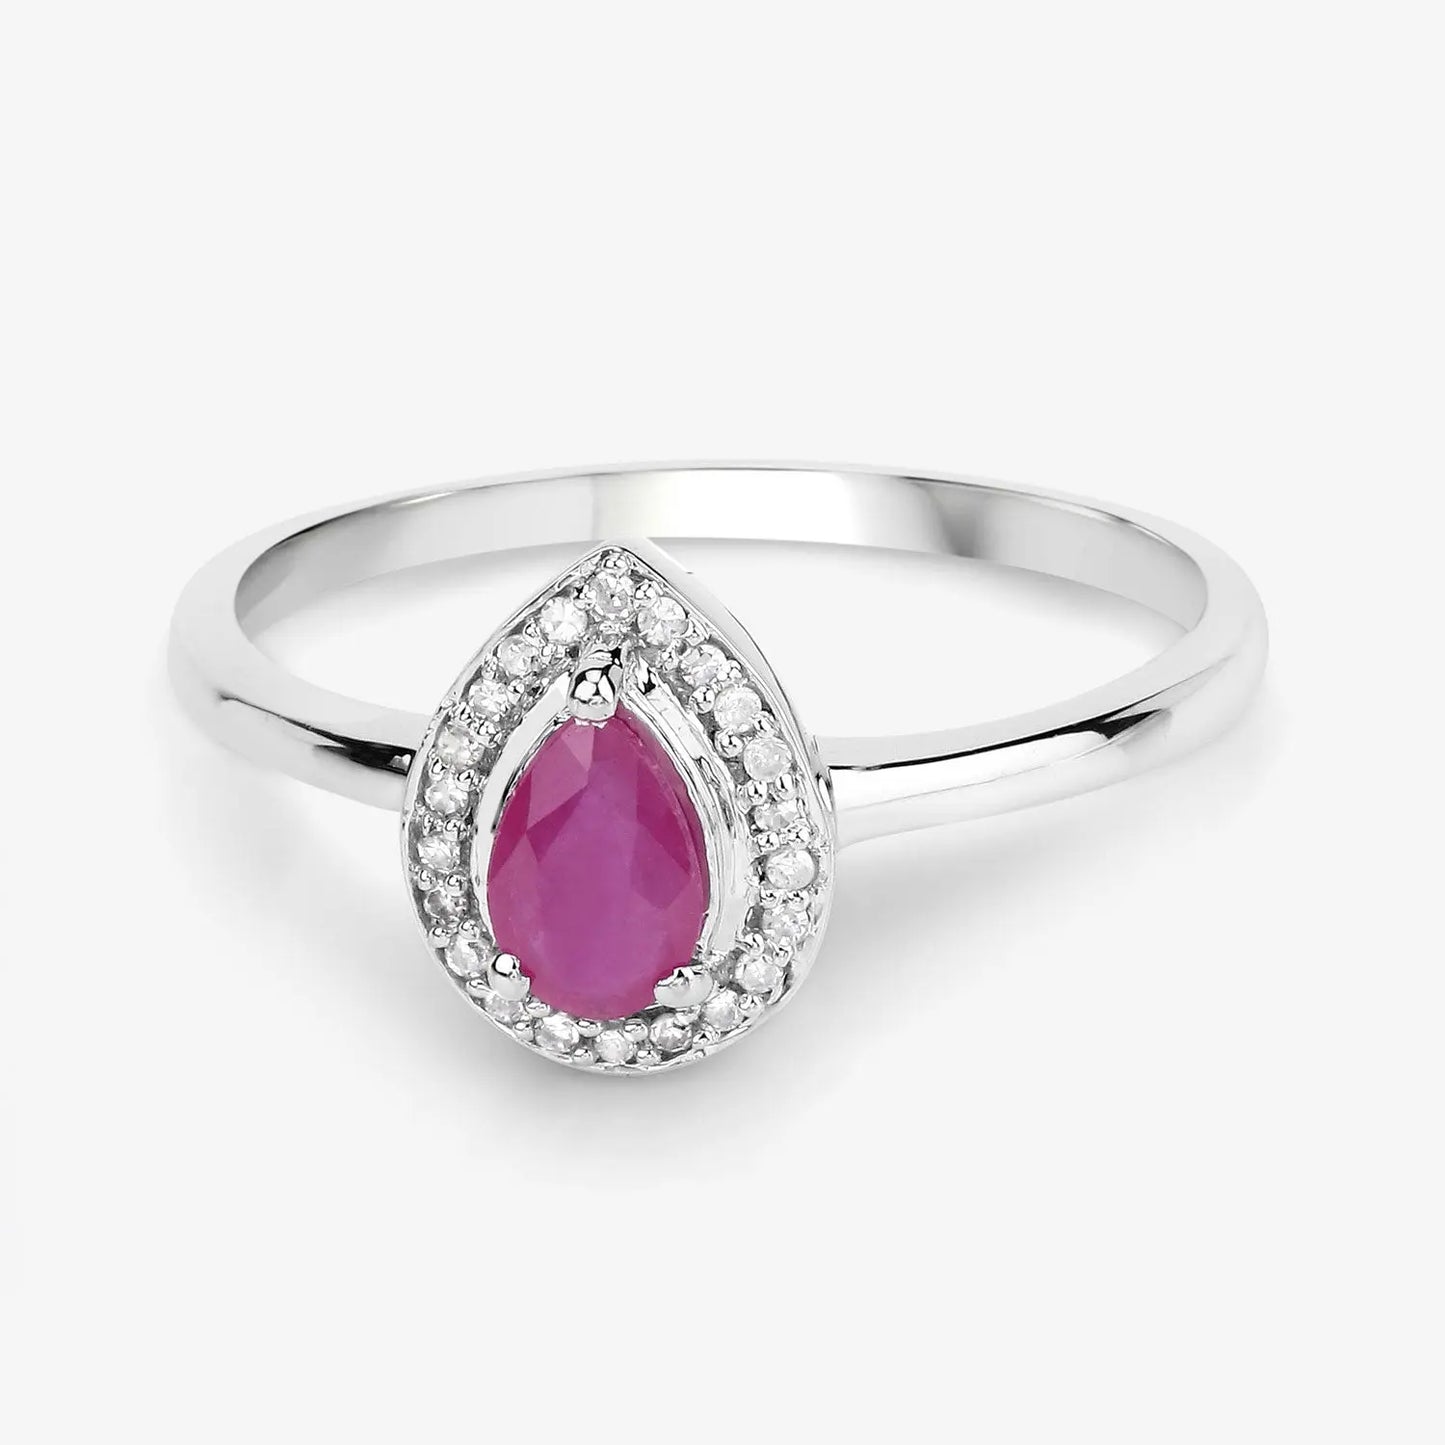 0.46 Carat Genuine Ruby and White Diamond 14K White Gold Engagement Ring - GOLDISSEYA